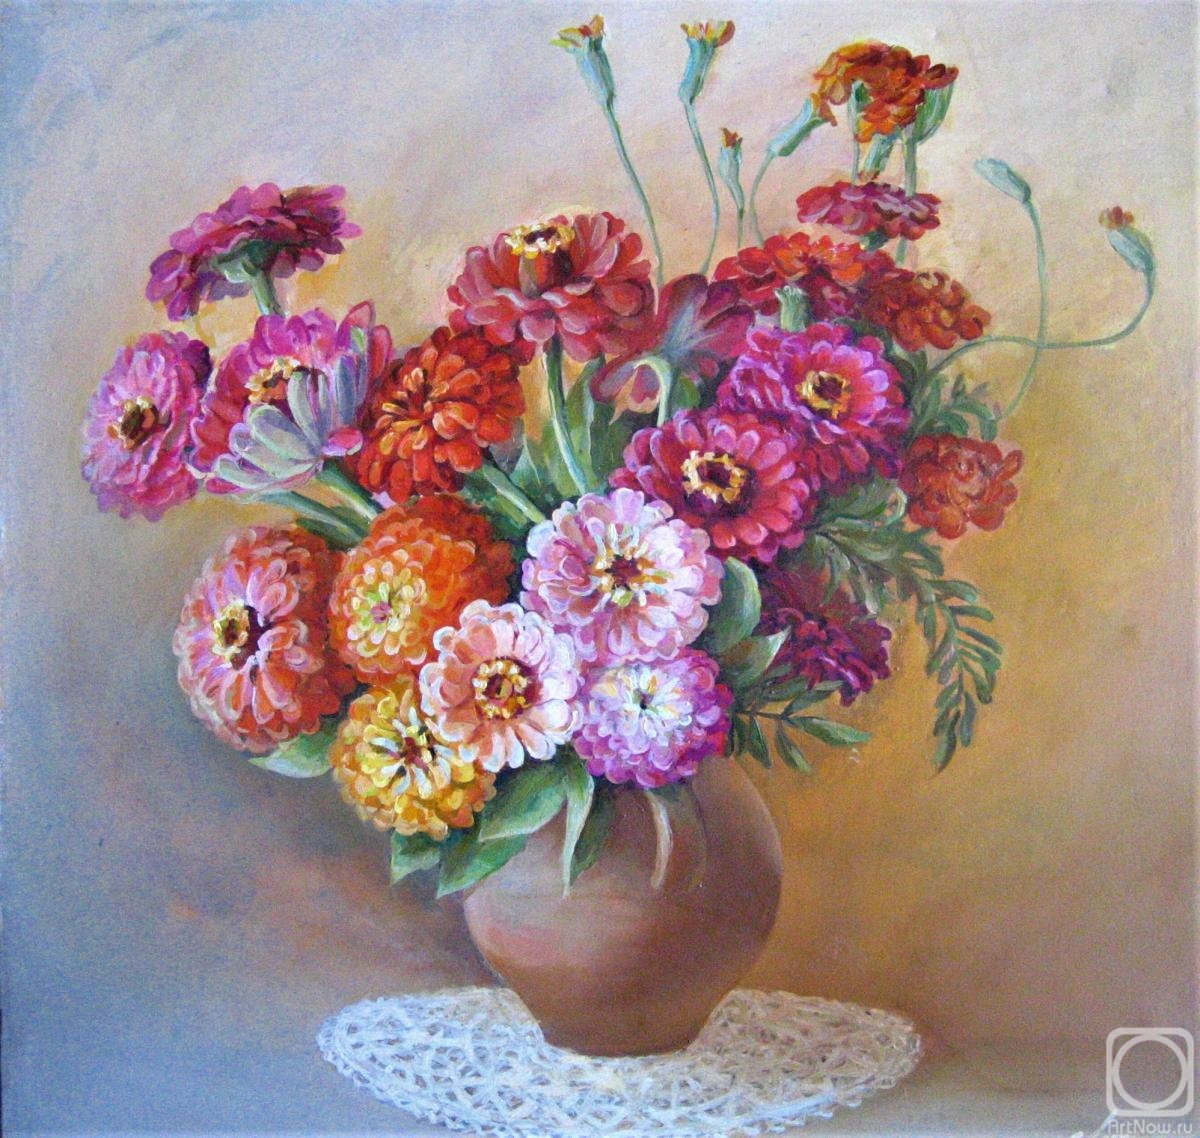 Luchkina Olga. Grandma's bouquet